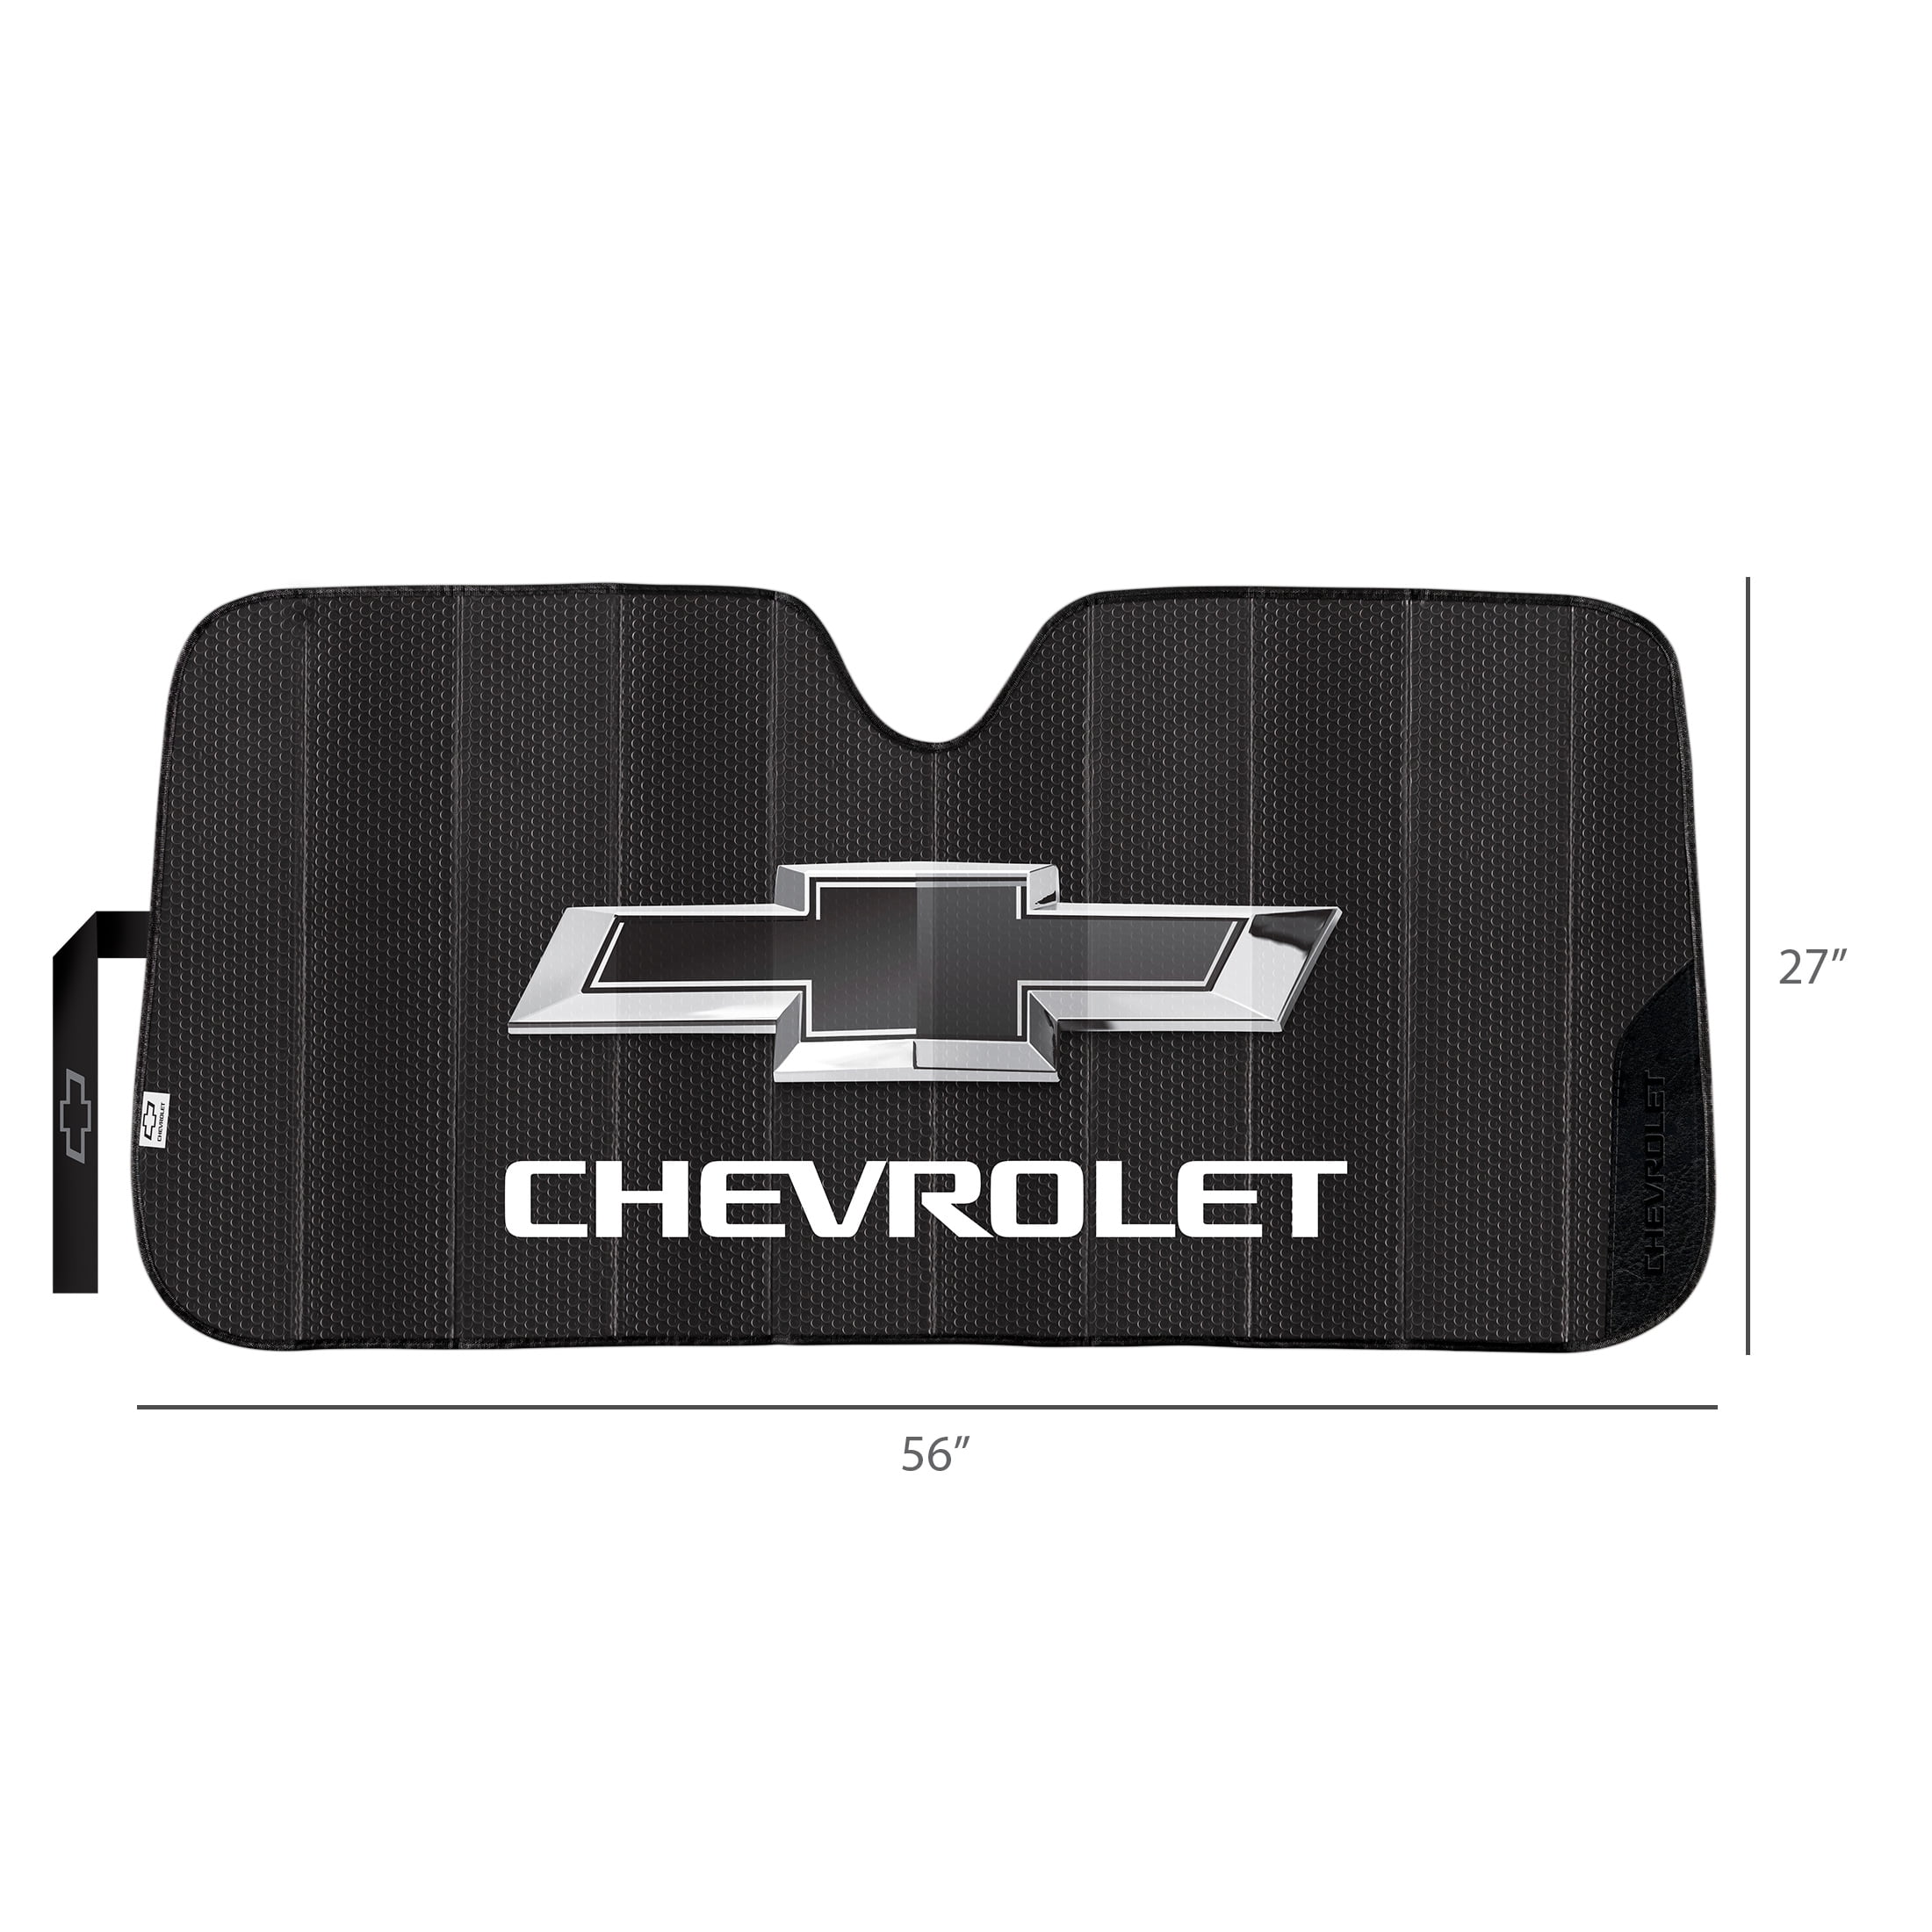 Plasticolor Chevy 58 x 27.5 Universal Fit Accordion Automotive Sunshade, Black, 1 Pc